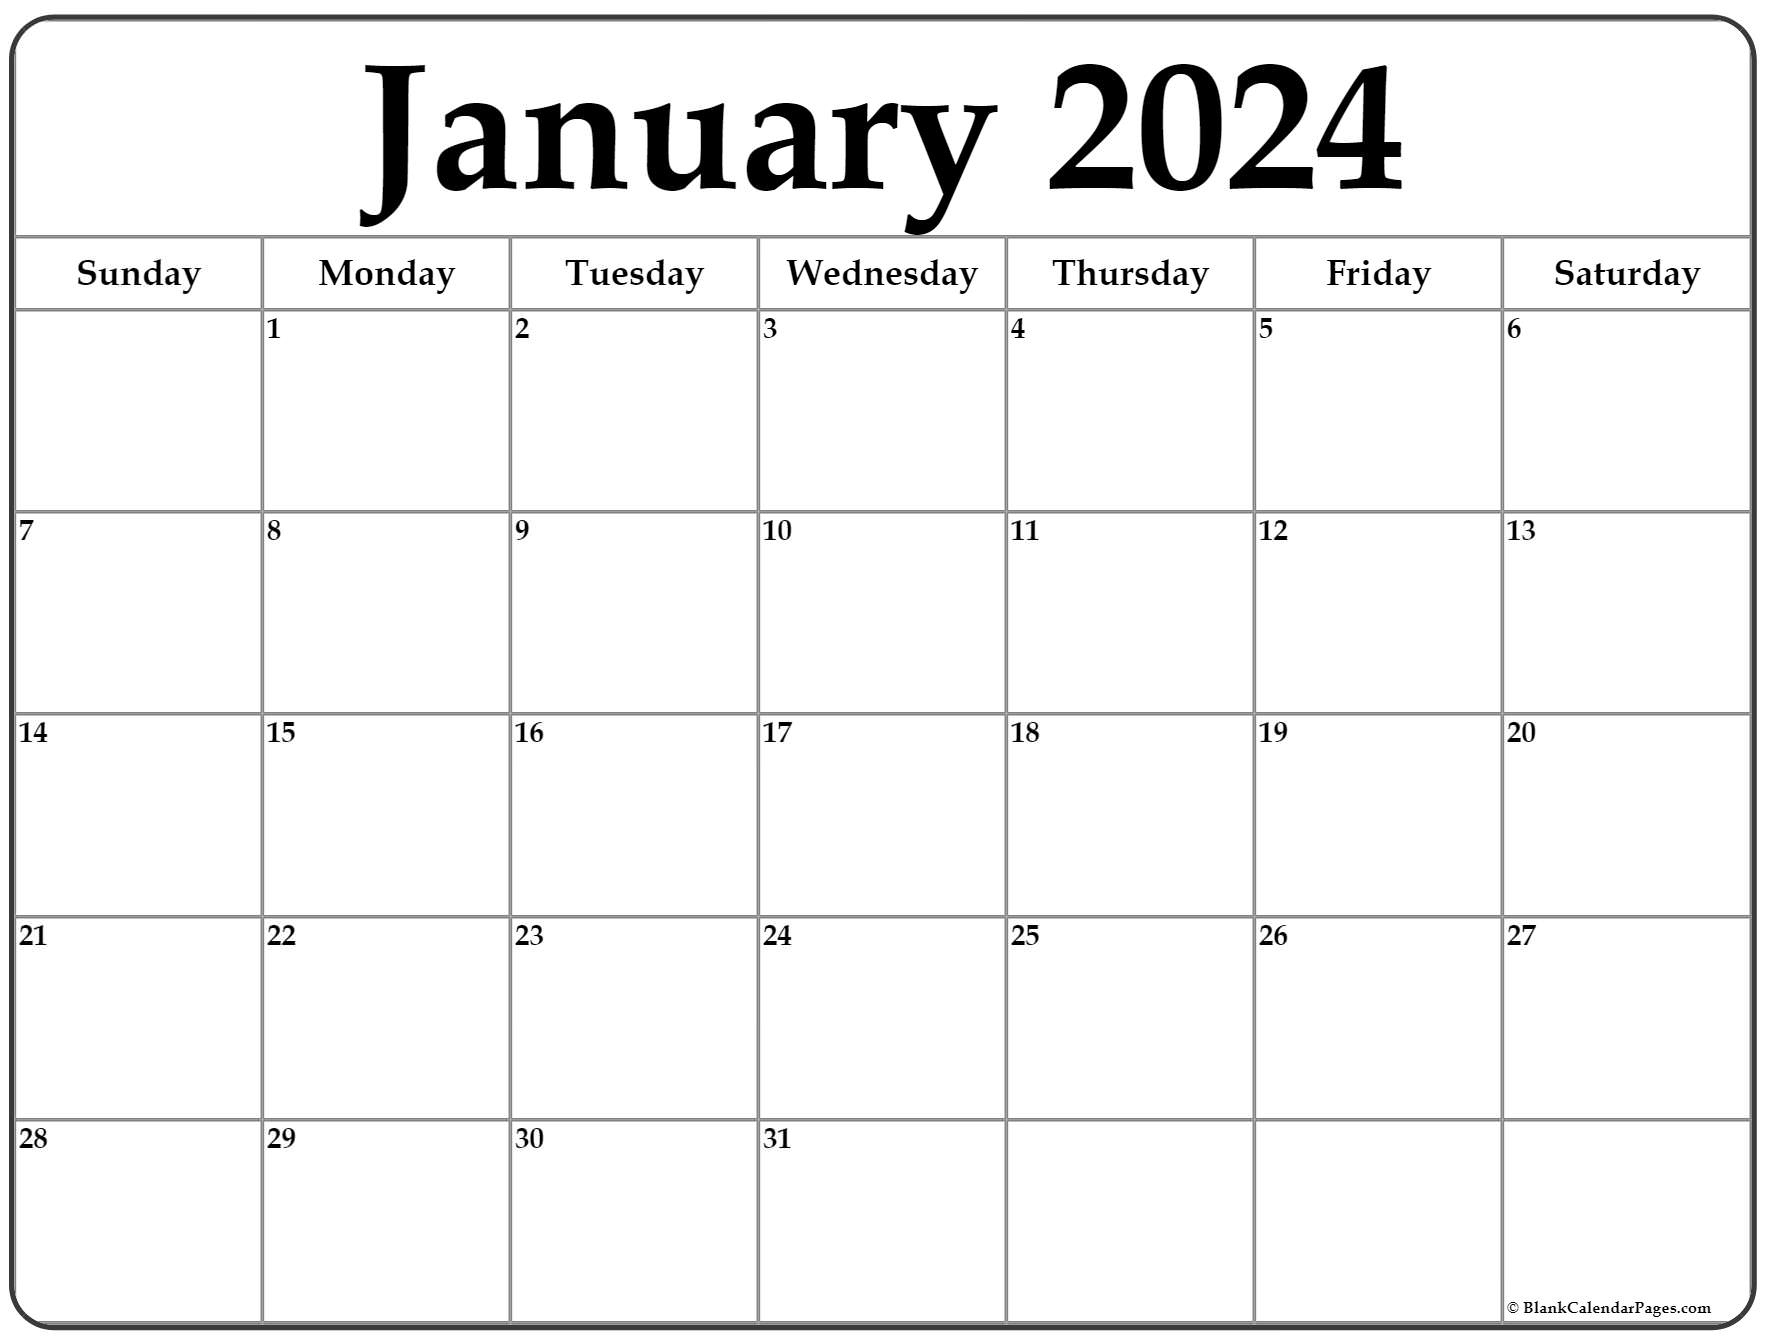 January 2024 Calendar | Free Printable Calendar | Printable 2024 Calendar By Month